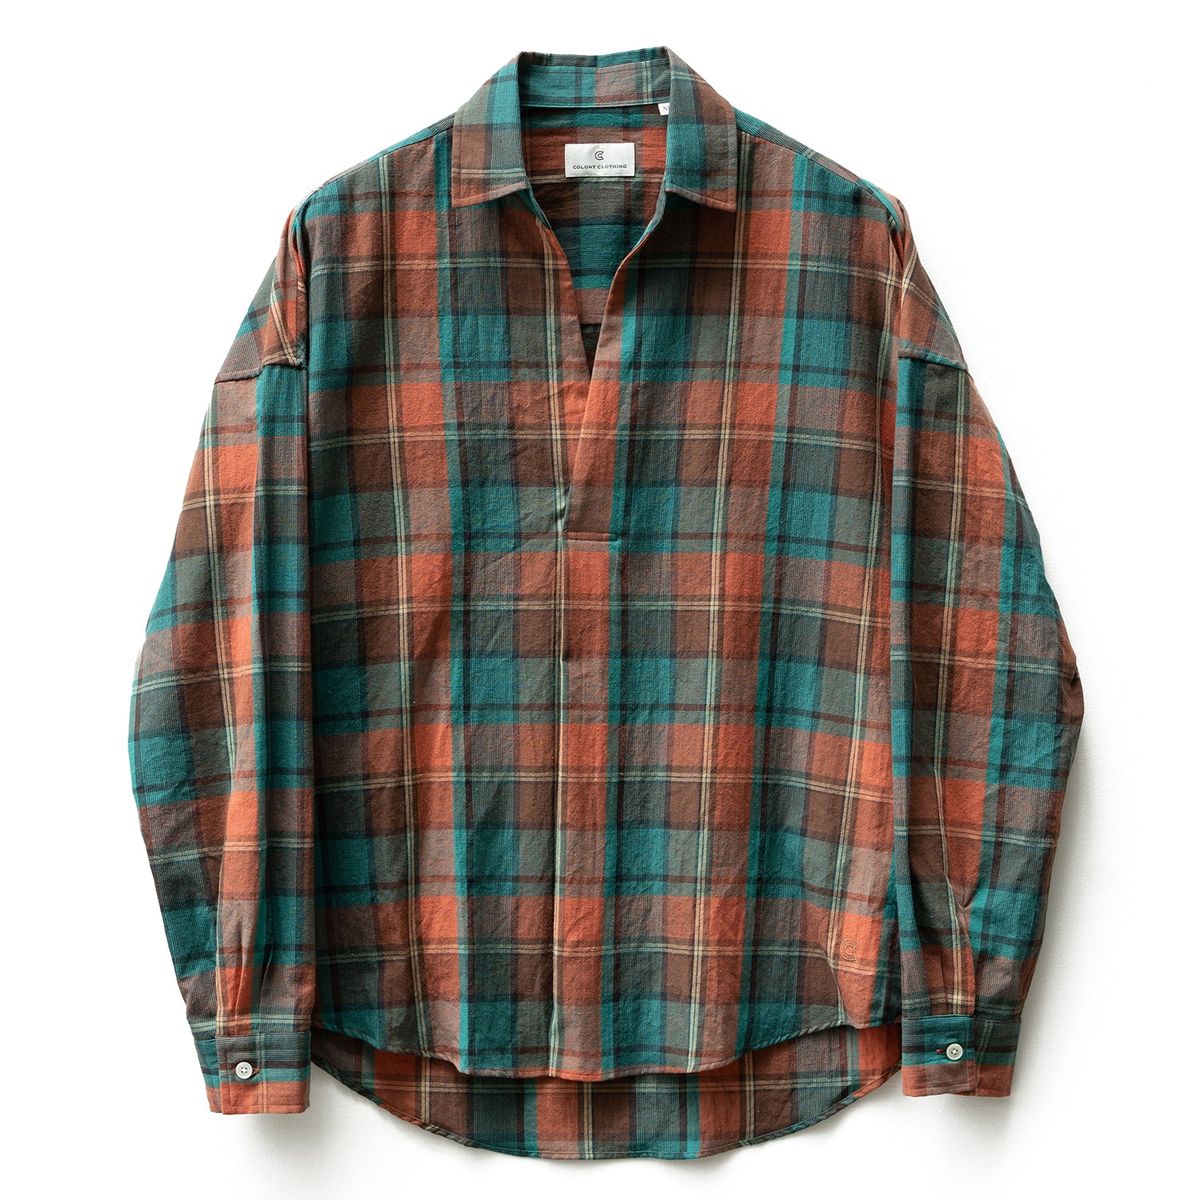 COLONY CLOTHING / ビッグチェック プールサイドシャツ / CC2301-SH02-03